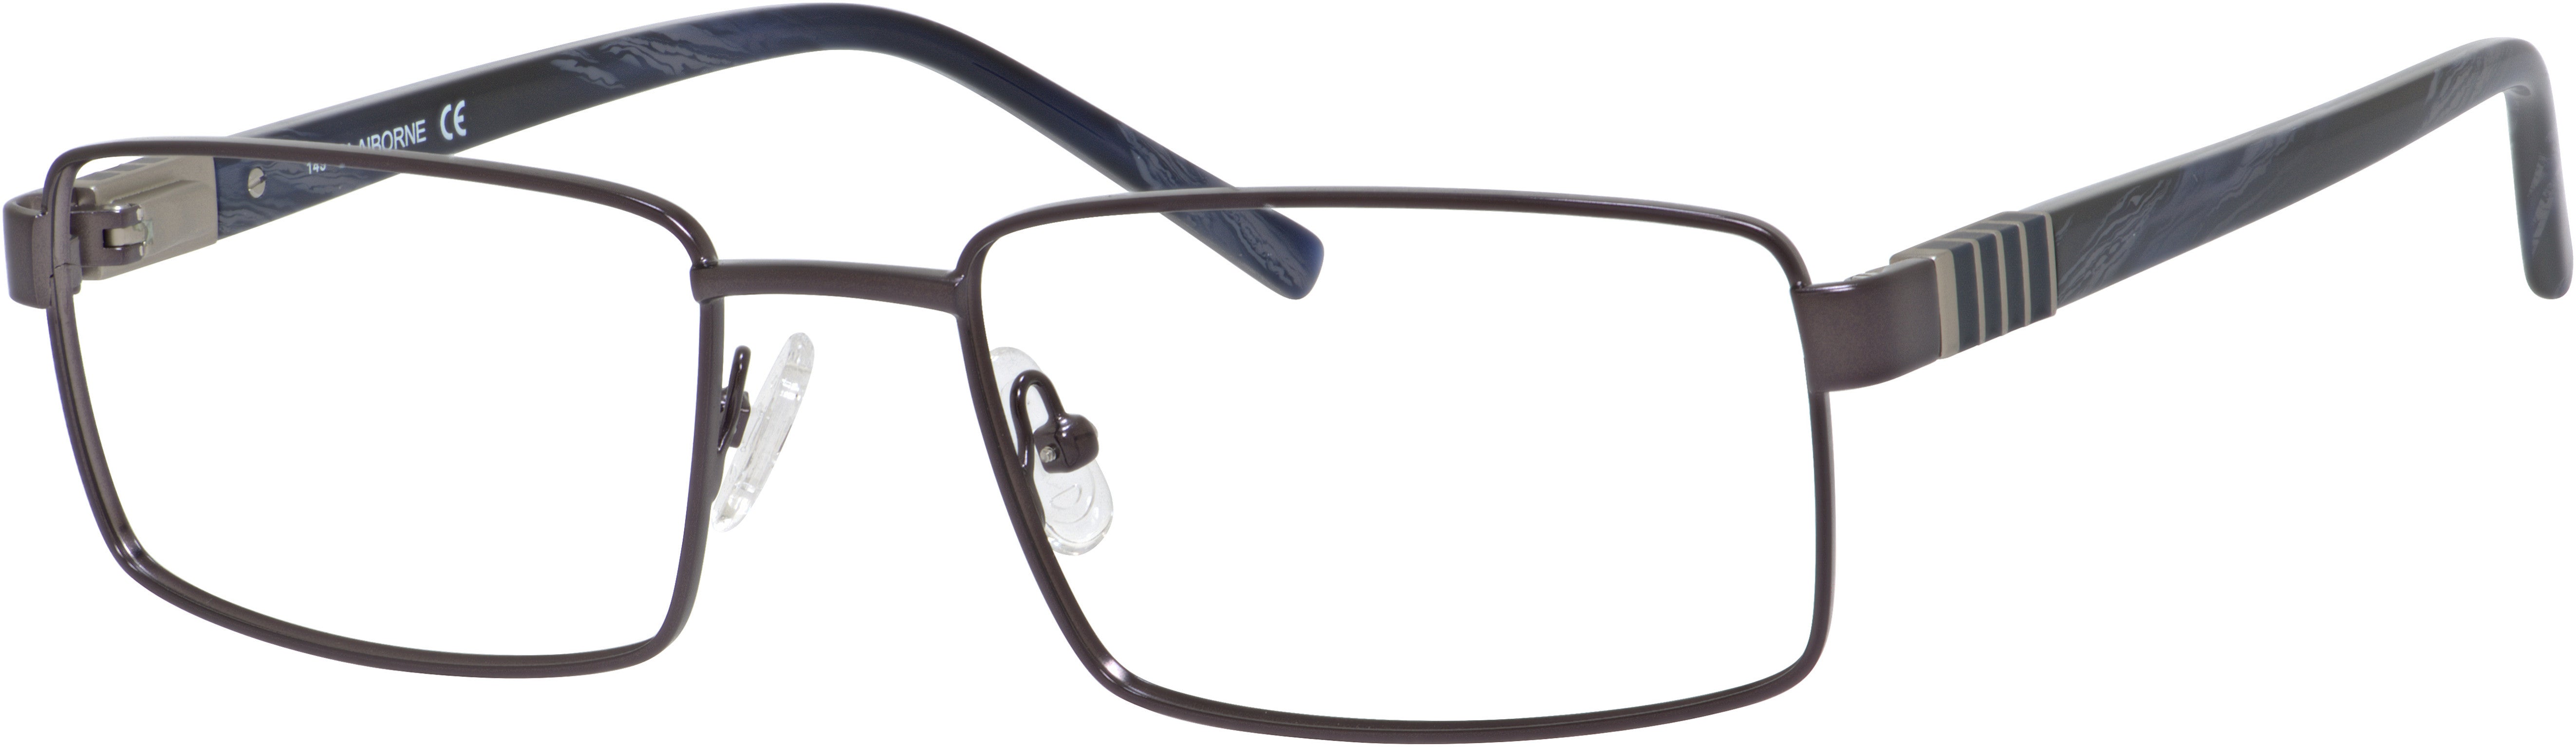  Claiborne 234XL Rectangular Eyeglasses 01J1-01J1  Ruthenium (00 Demo Lens)